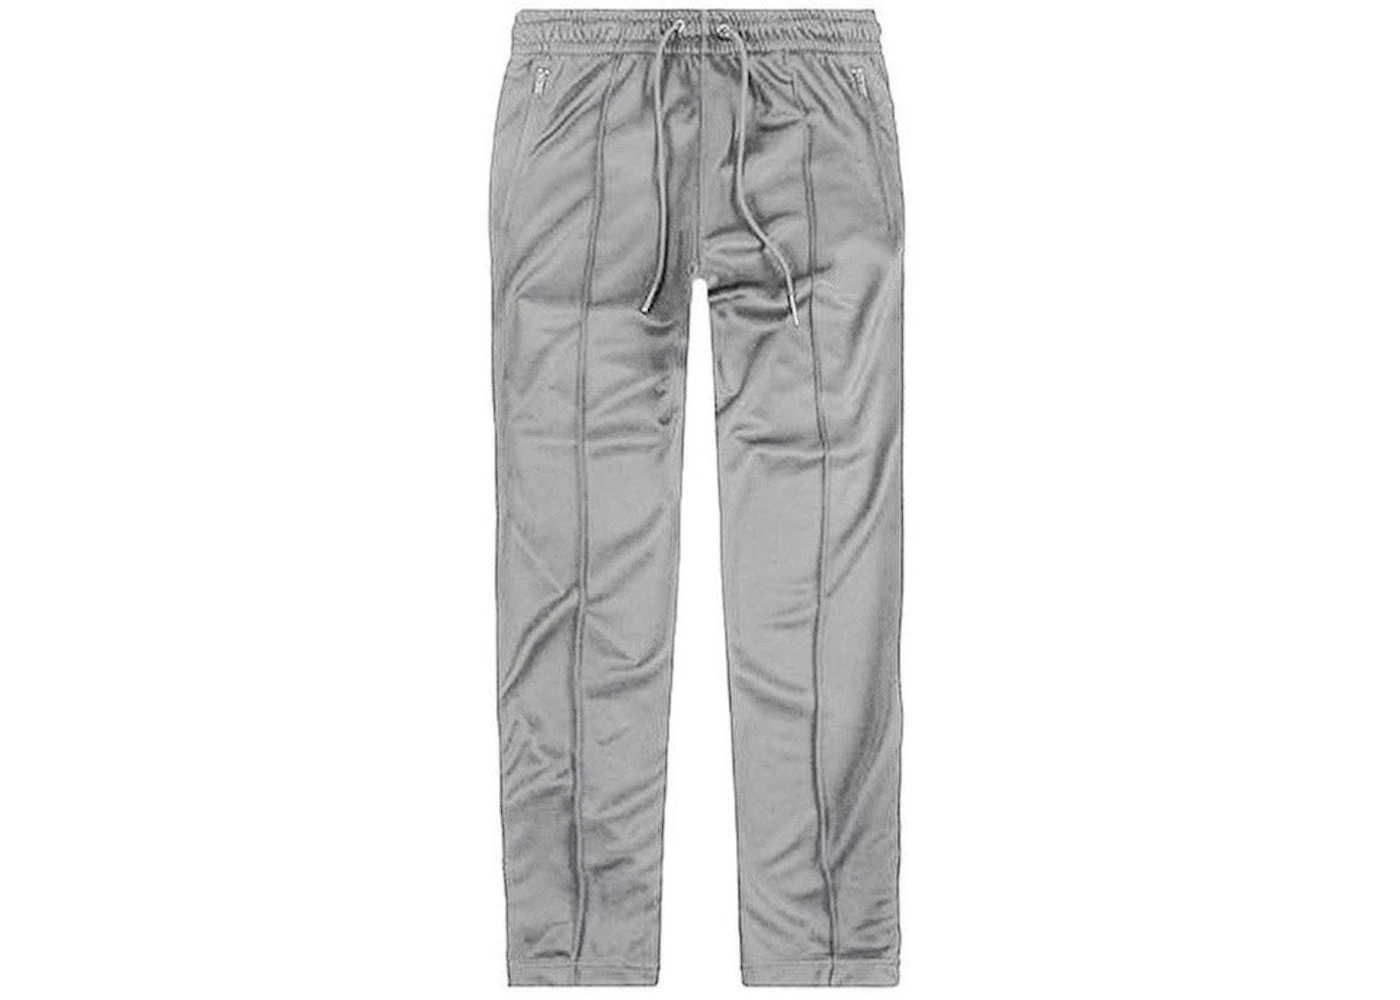 Dior x Jordan Athletic Pants Grey - SS20